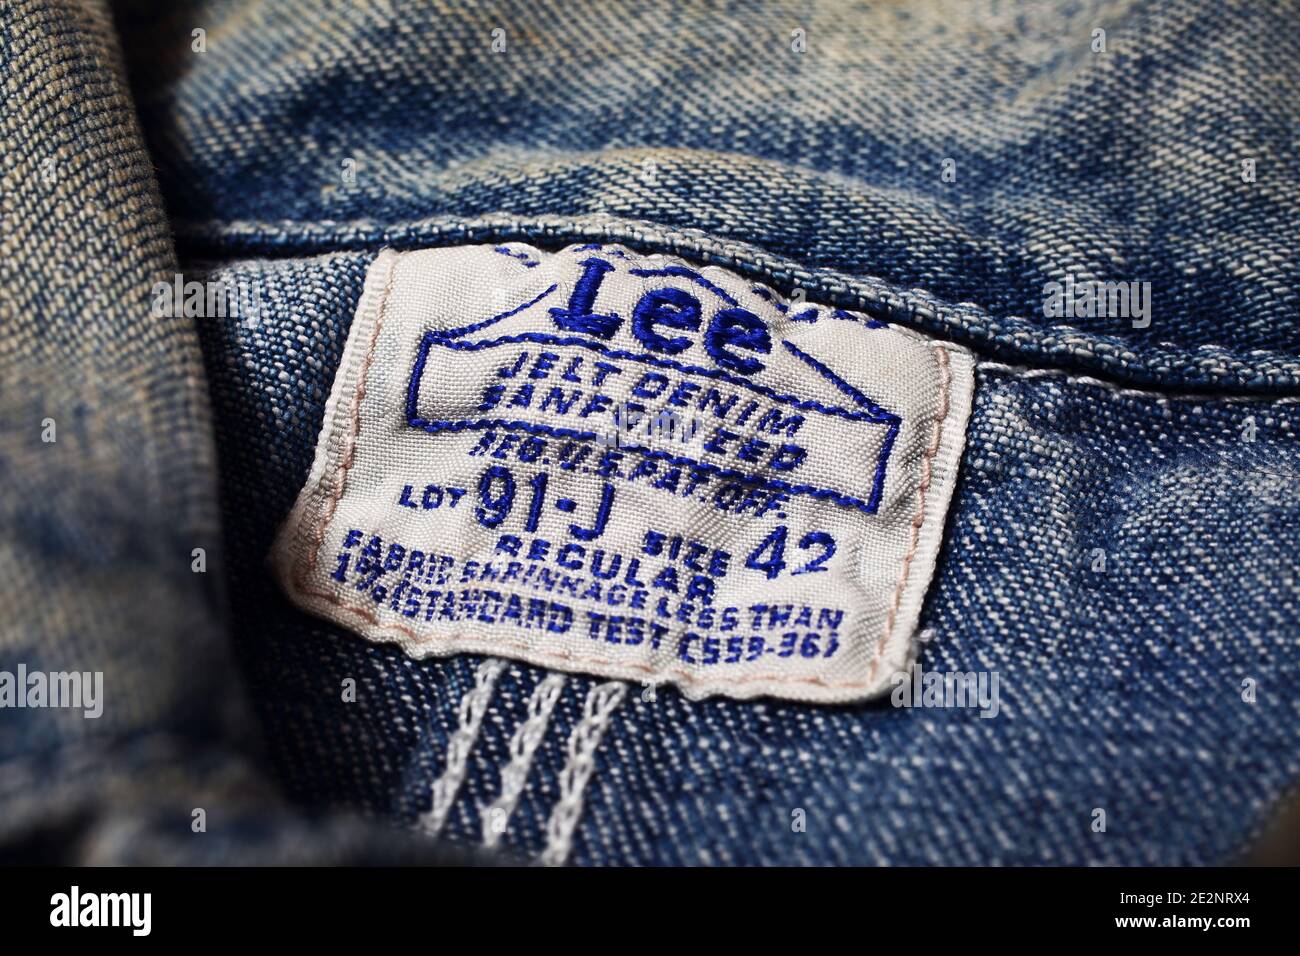 close-up of Lee Jeans vintage denim label Stock Photo - Alamy